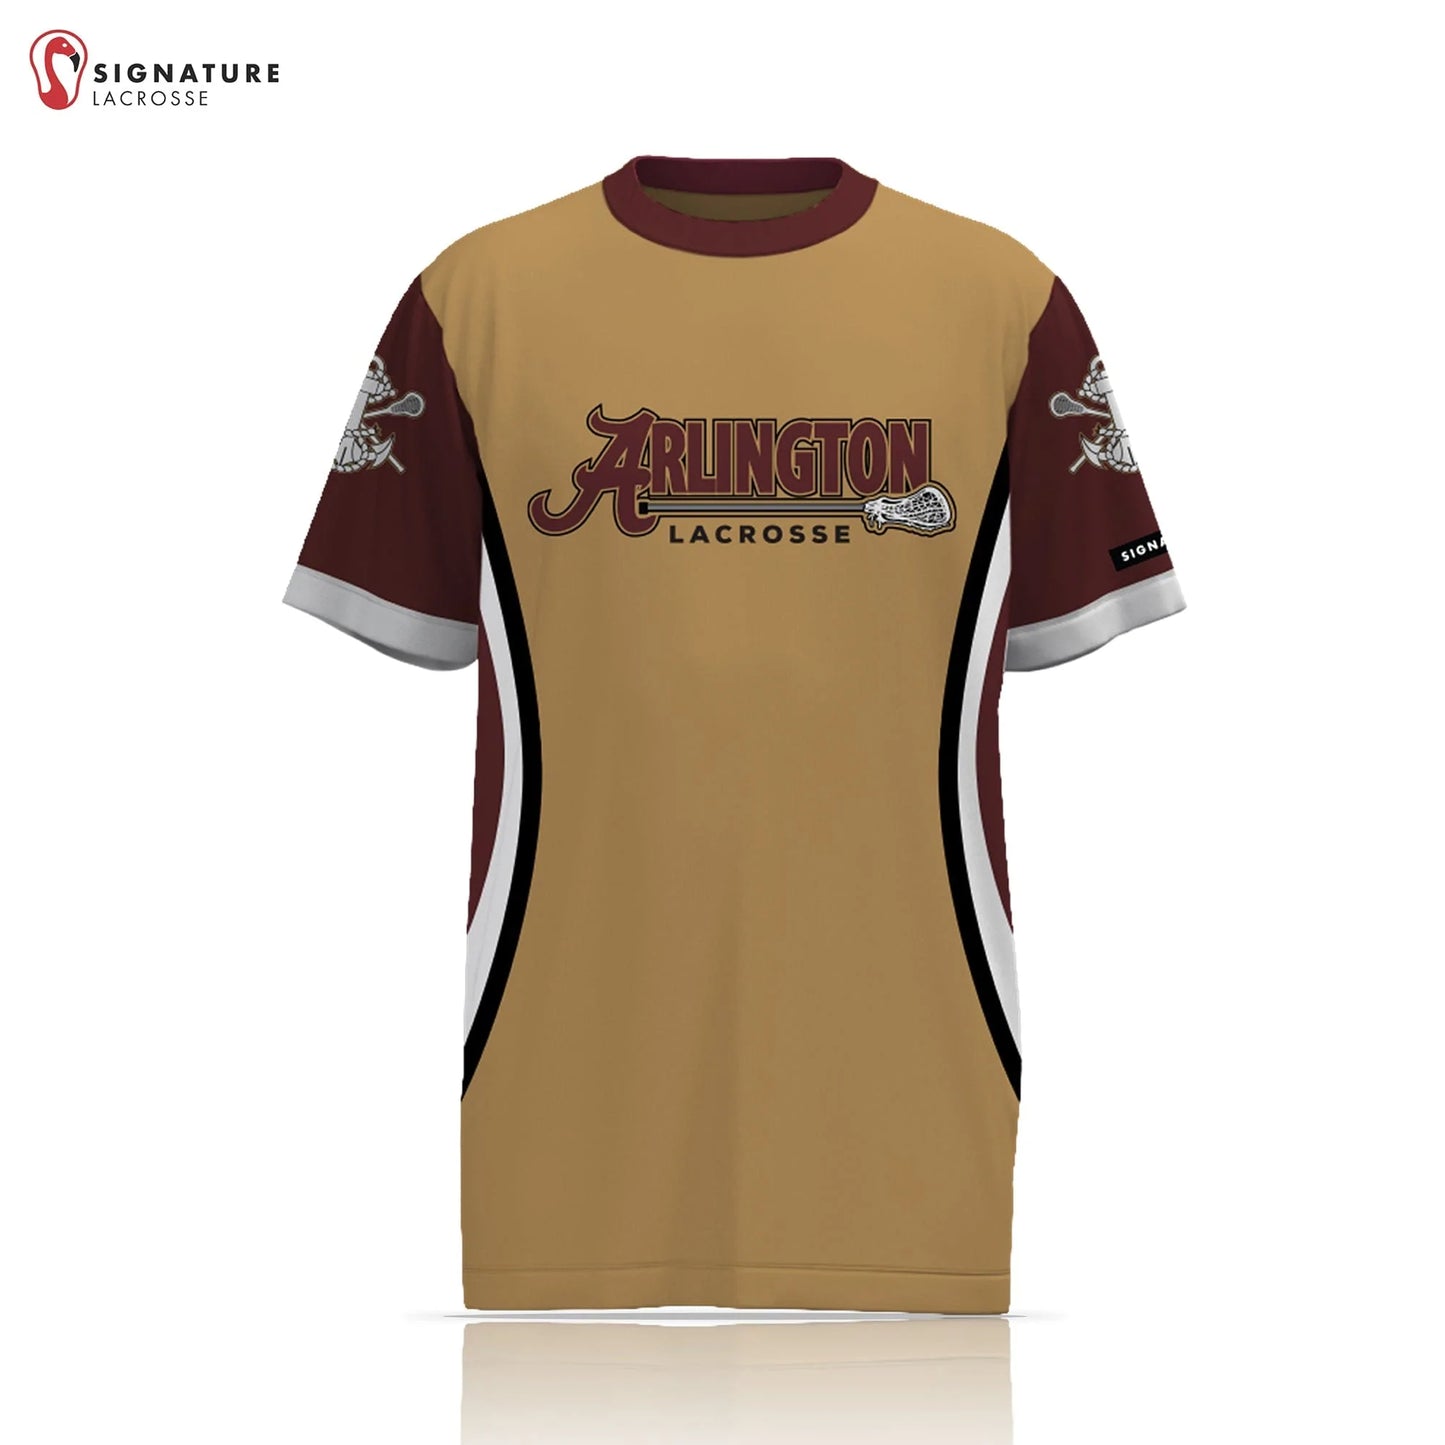 Arlington Lagrange Lacrosse Men's Short Sleeve Shooter Shirt Signature Lacrosse